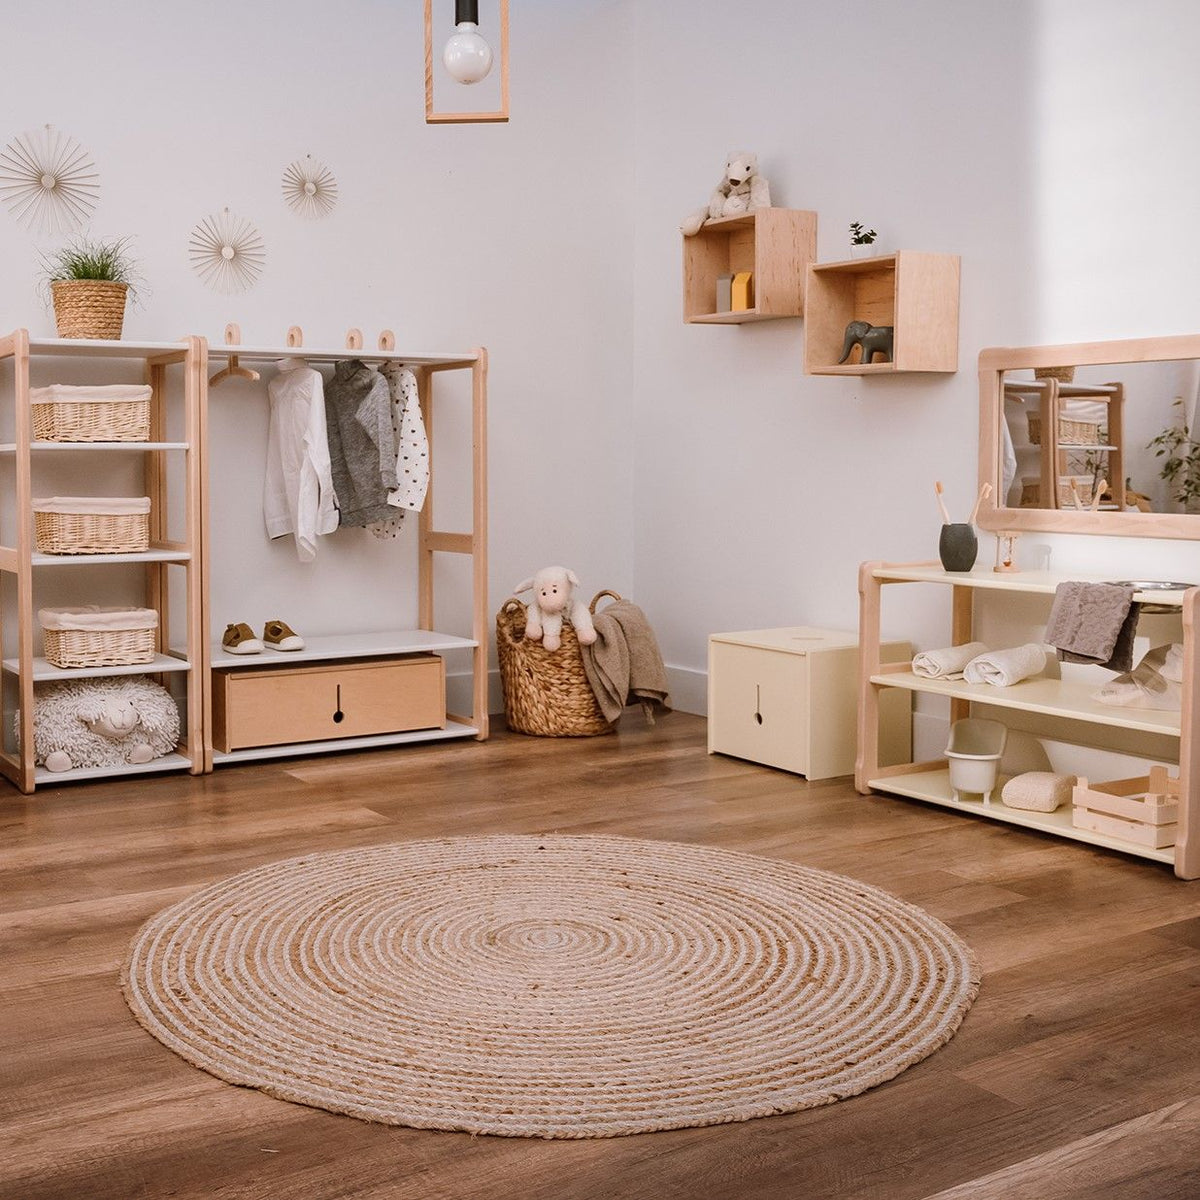 Wardrobe with shelf combined with maxi shelf - Montessori®